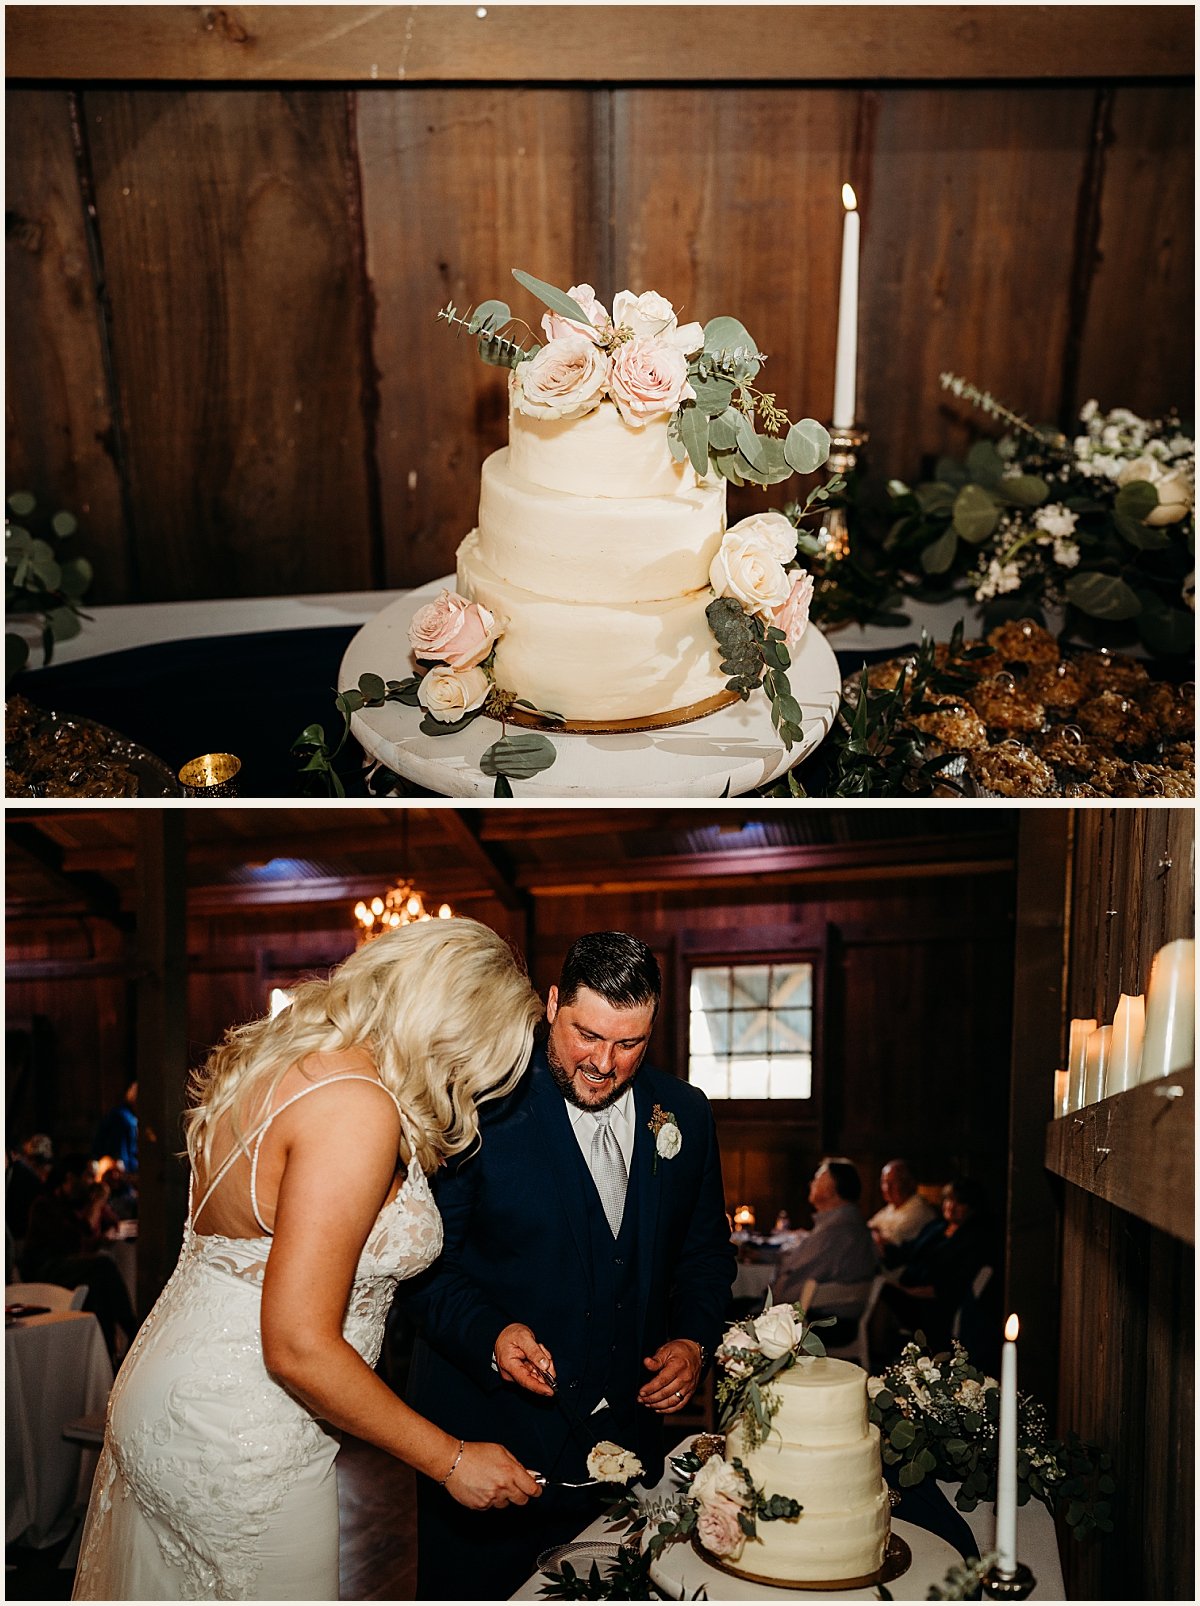 Bride and groom cutting the wedding cake | Lauren Crumpler Photography | Texas Wedding Photographer